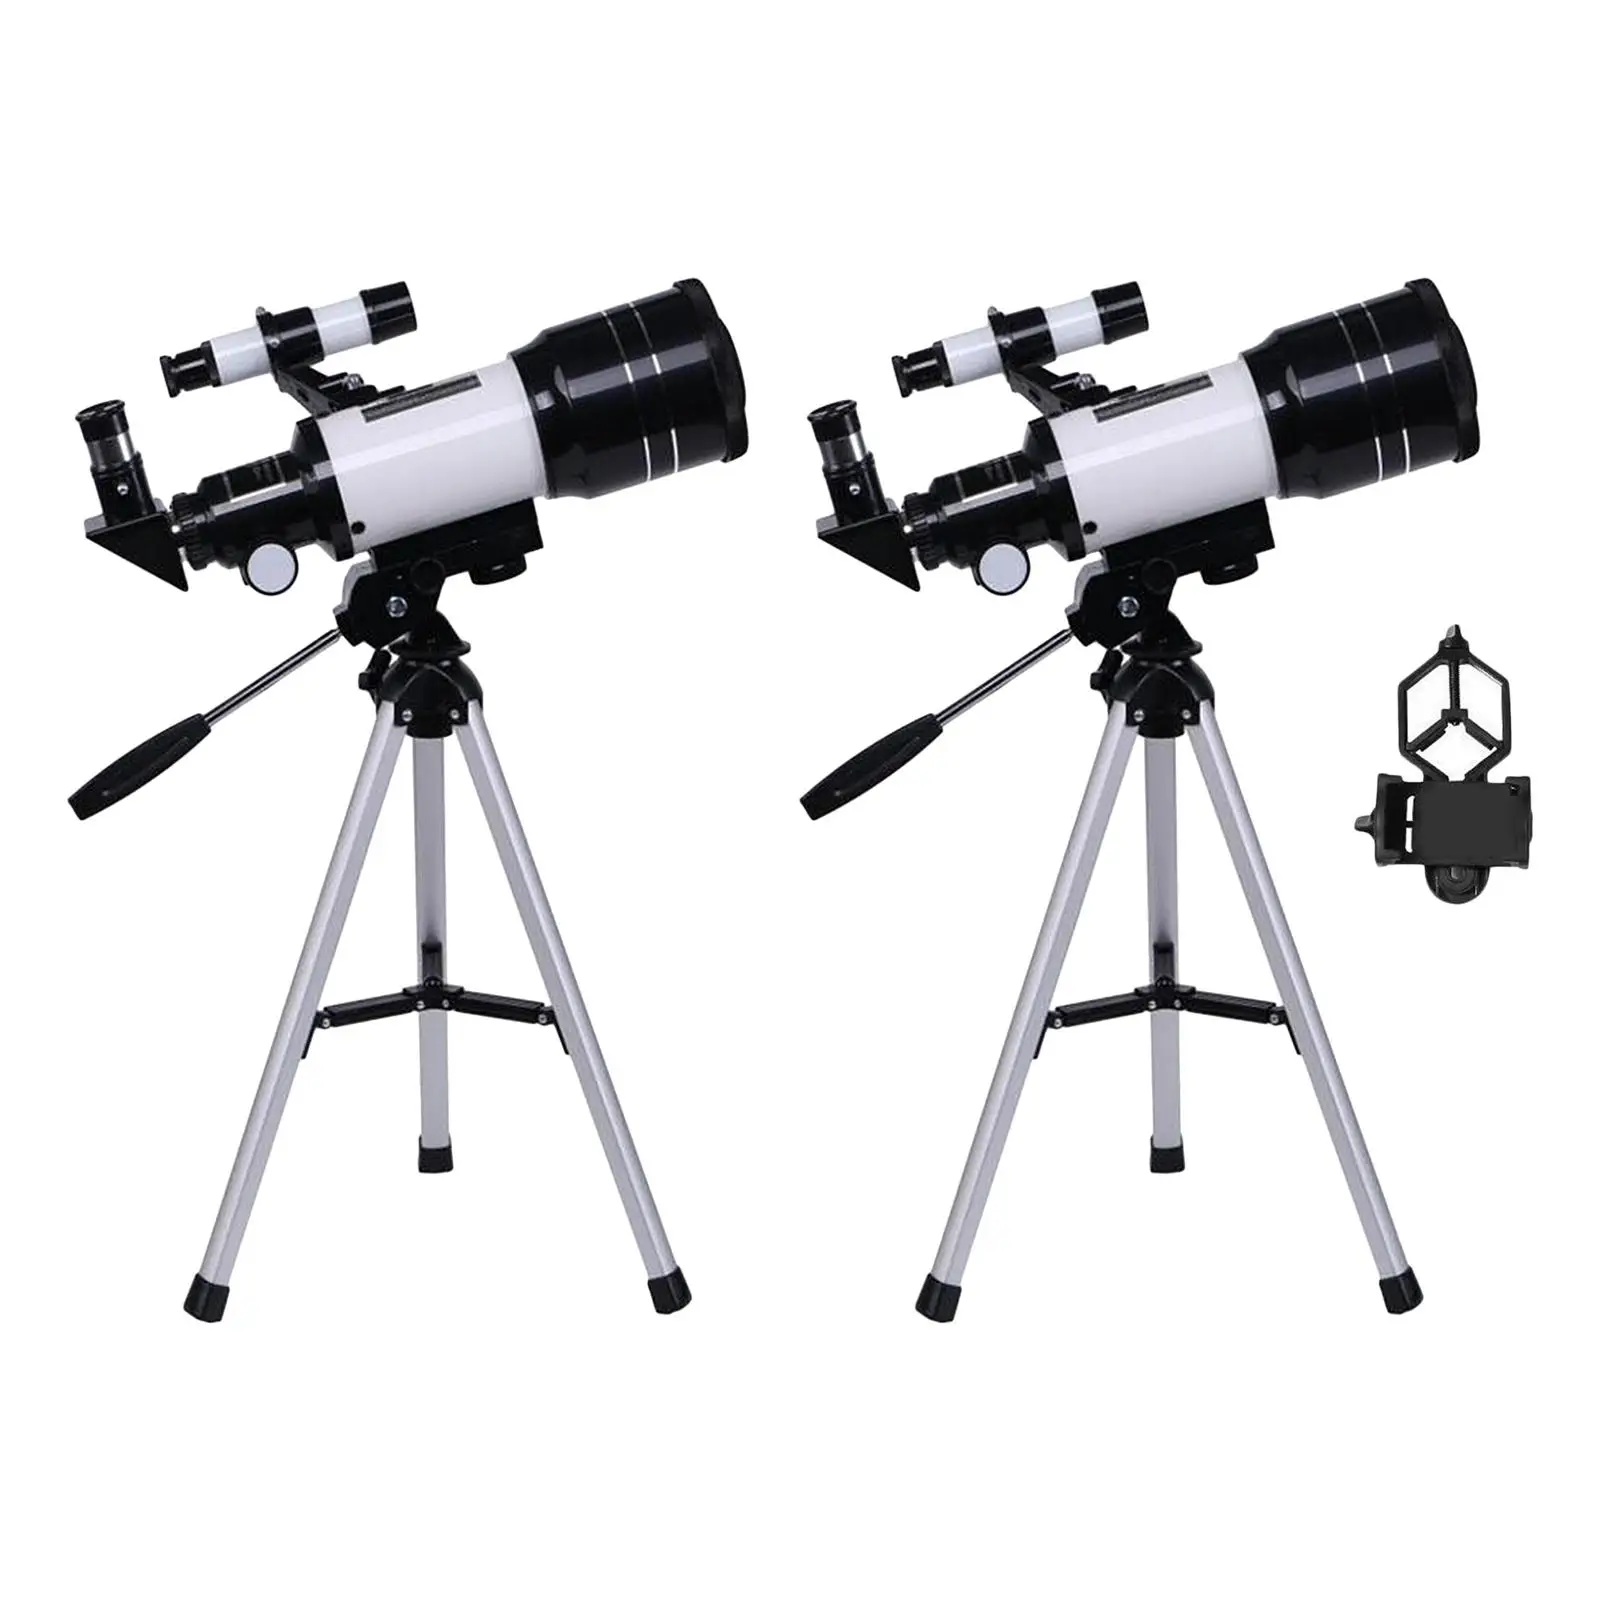 F30070 70mm Astronomical Reflector Telescope w/ Tripod